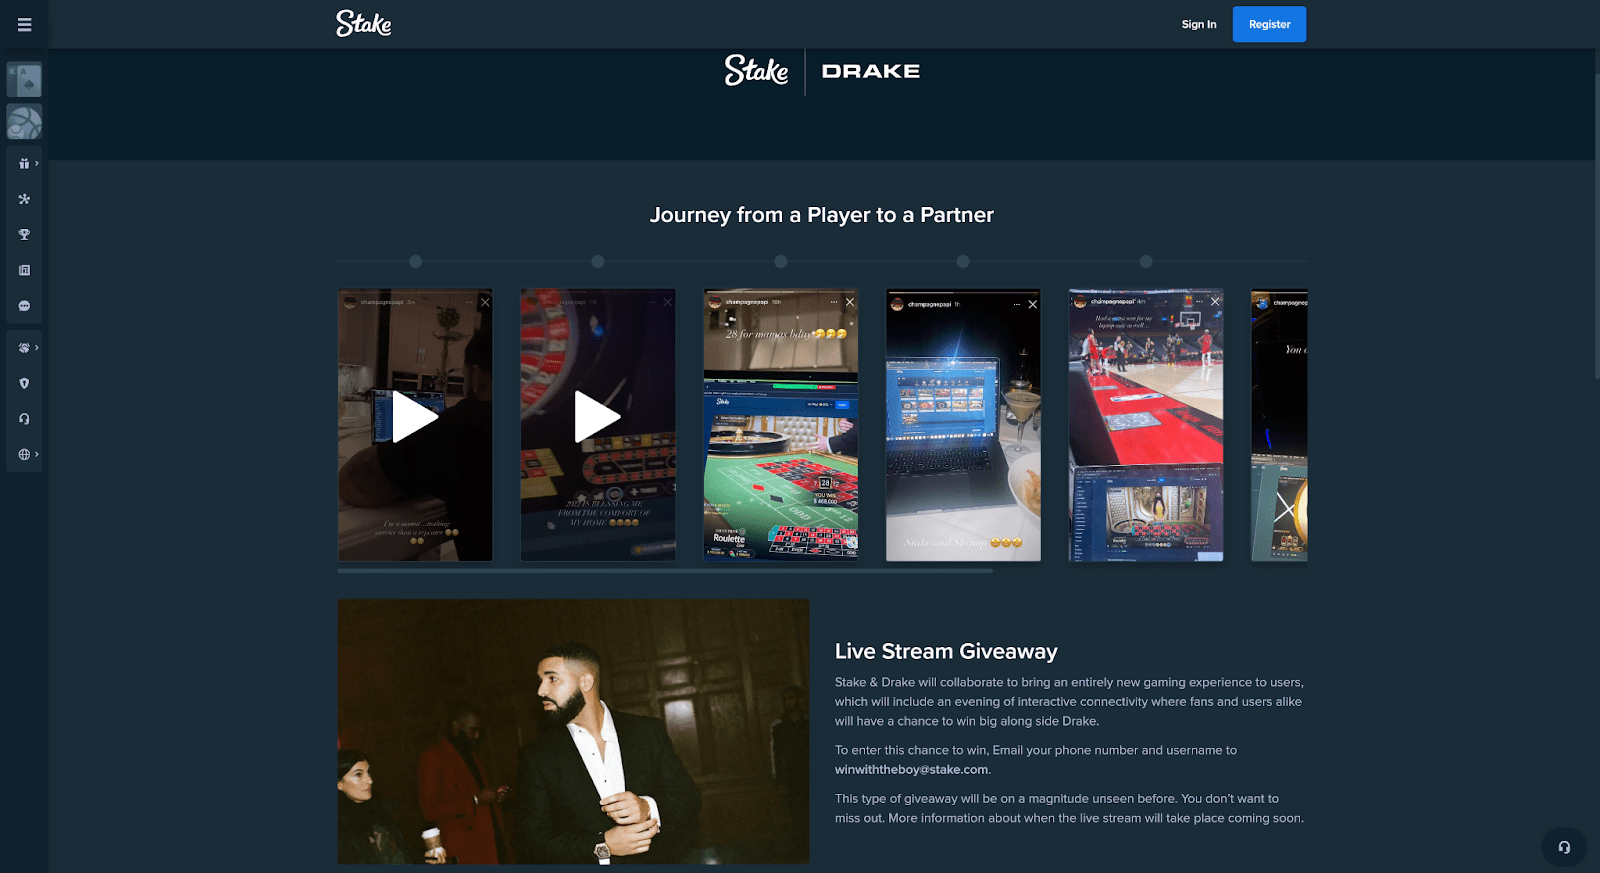 A screen shot of Stake.com's subpage Drake